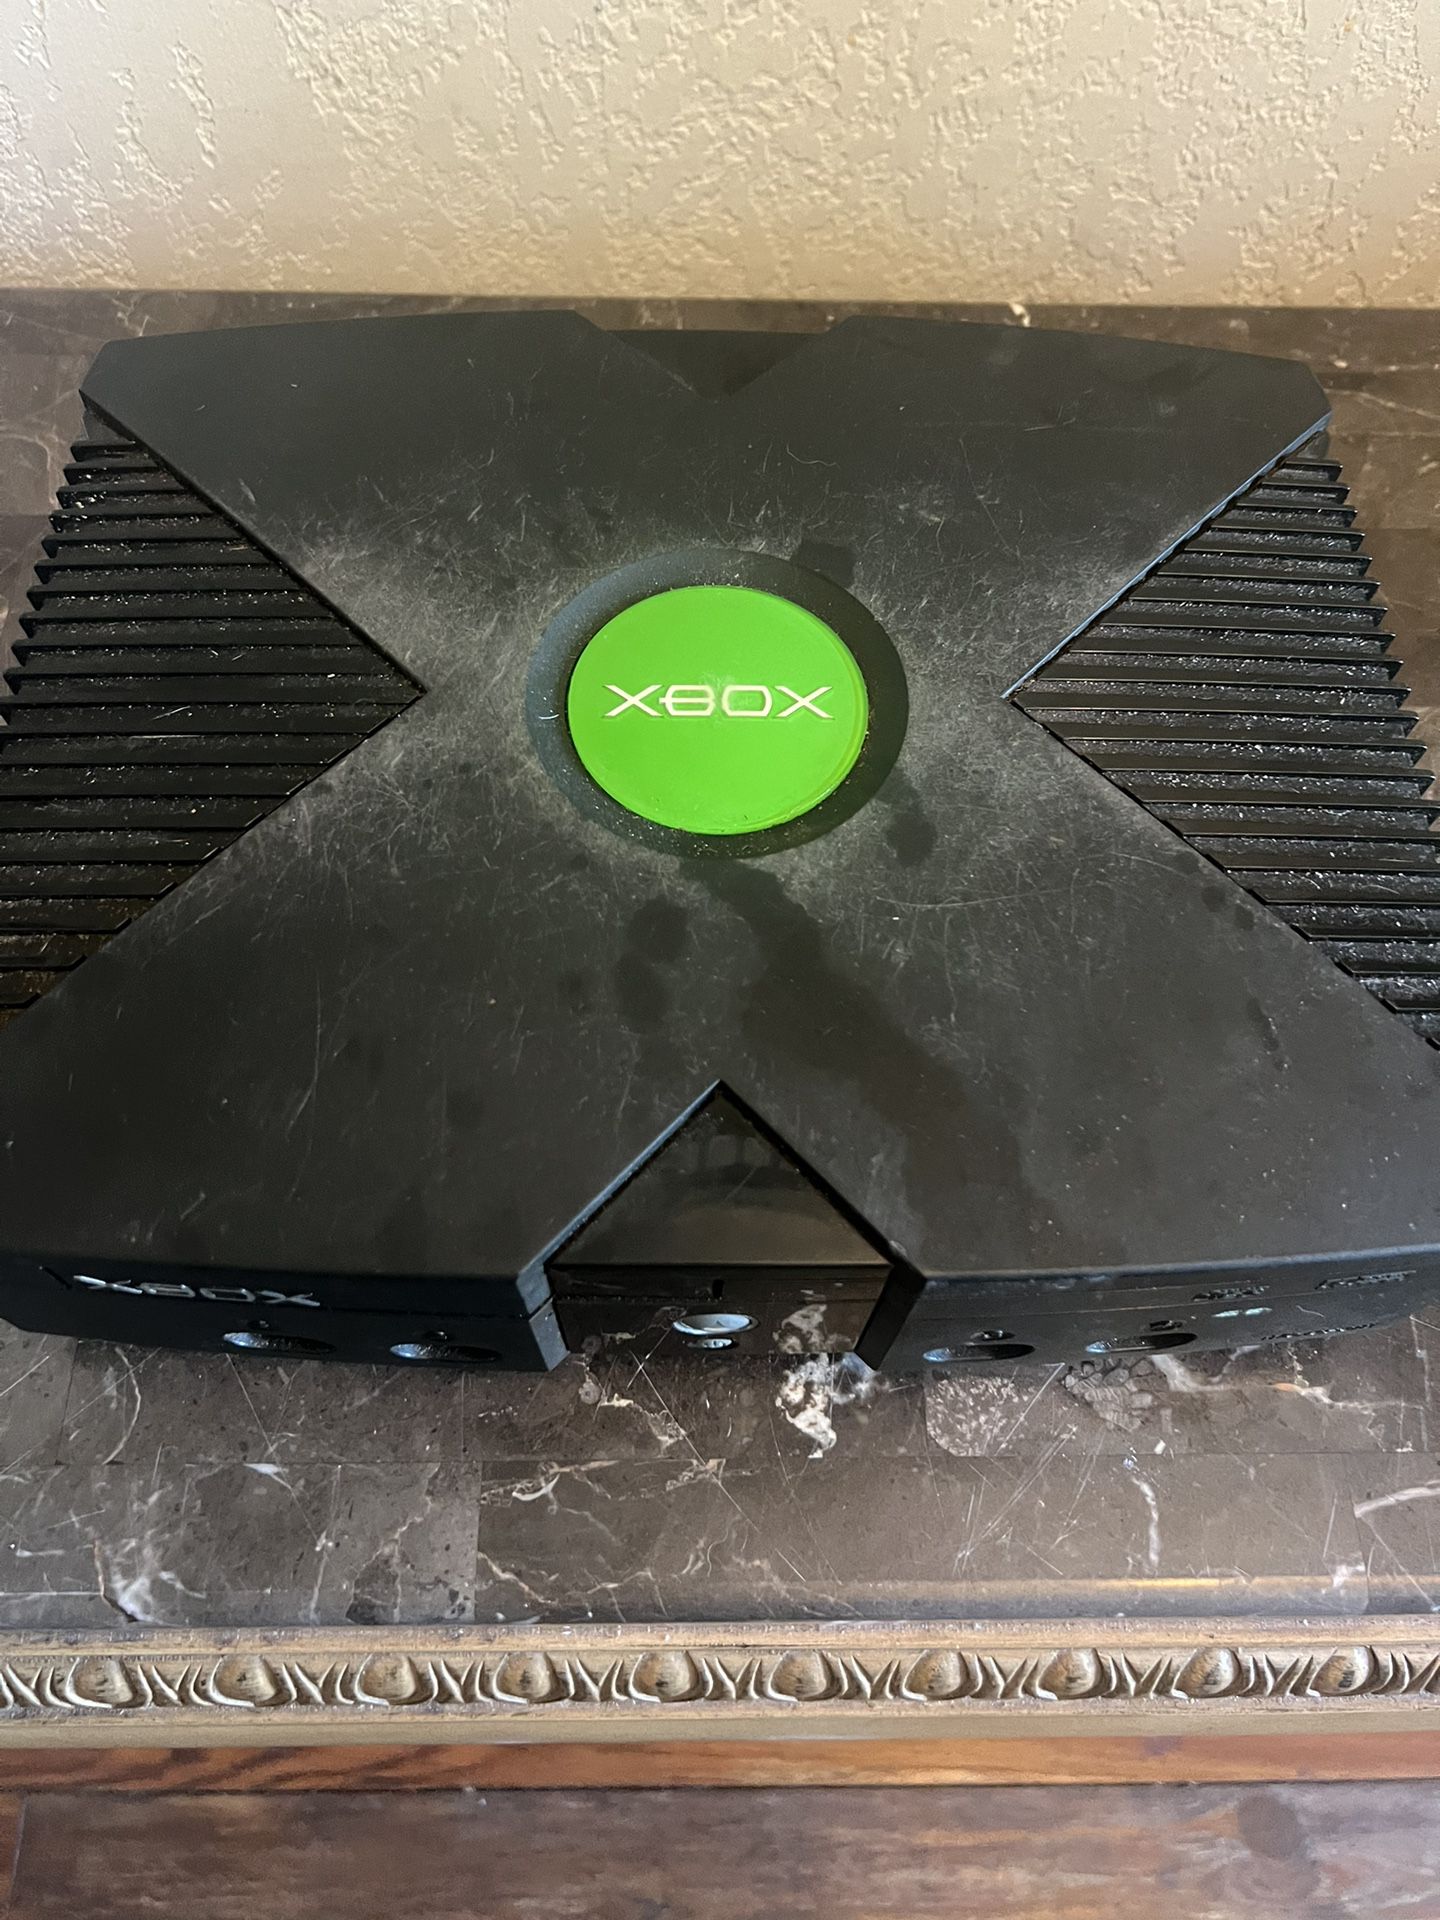 Original Xbox “ Not Working”